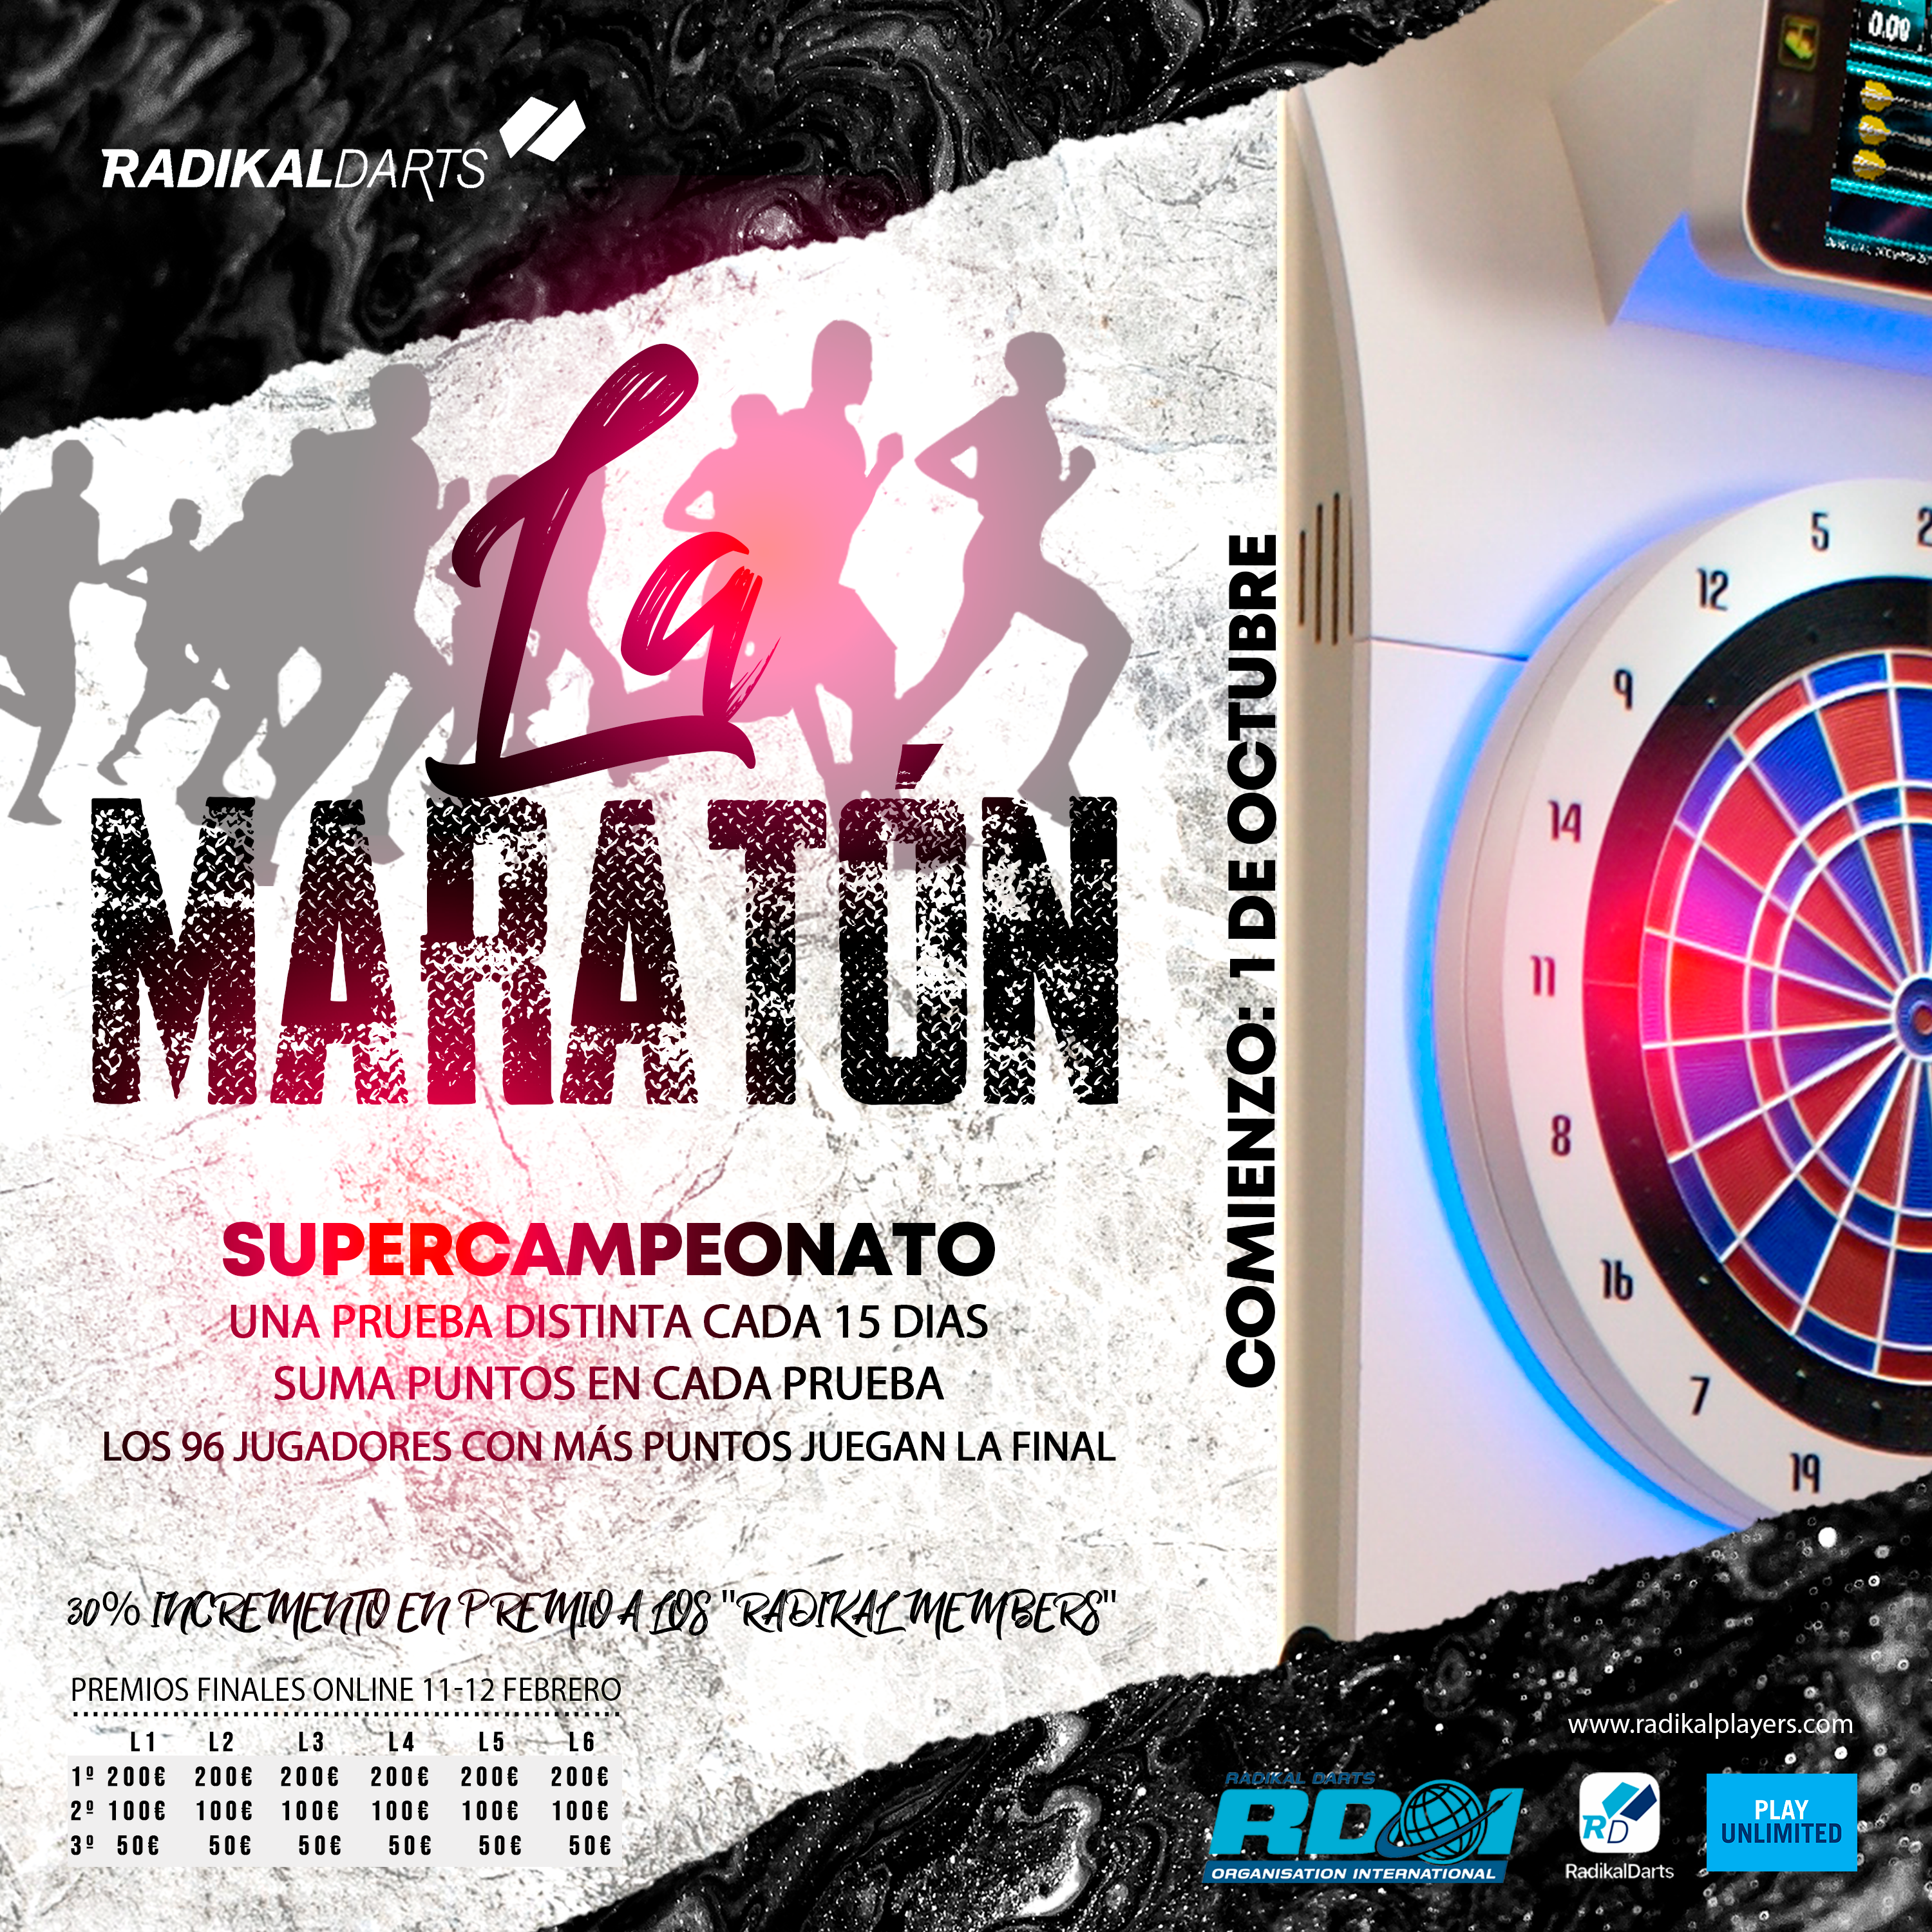 Super Campeonato de dardos La Maratón de Radikal Darts